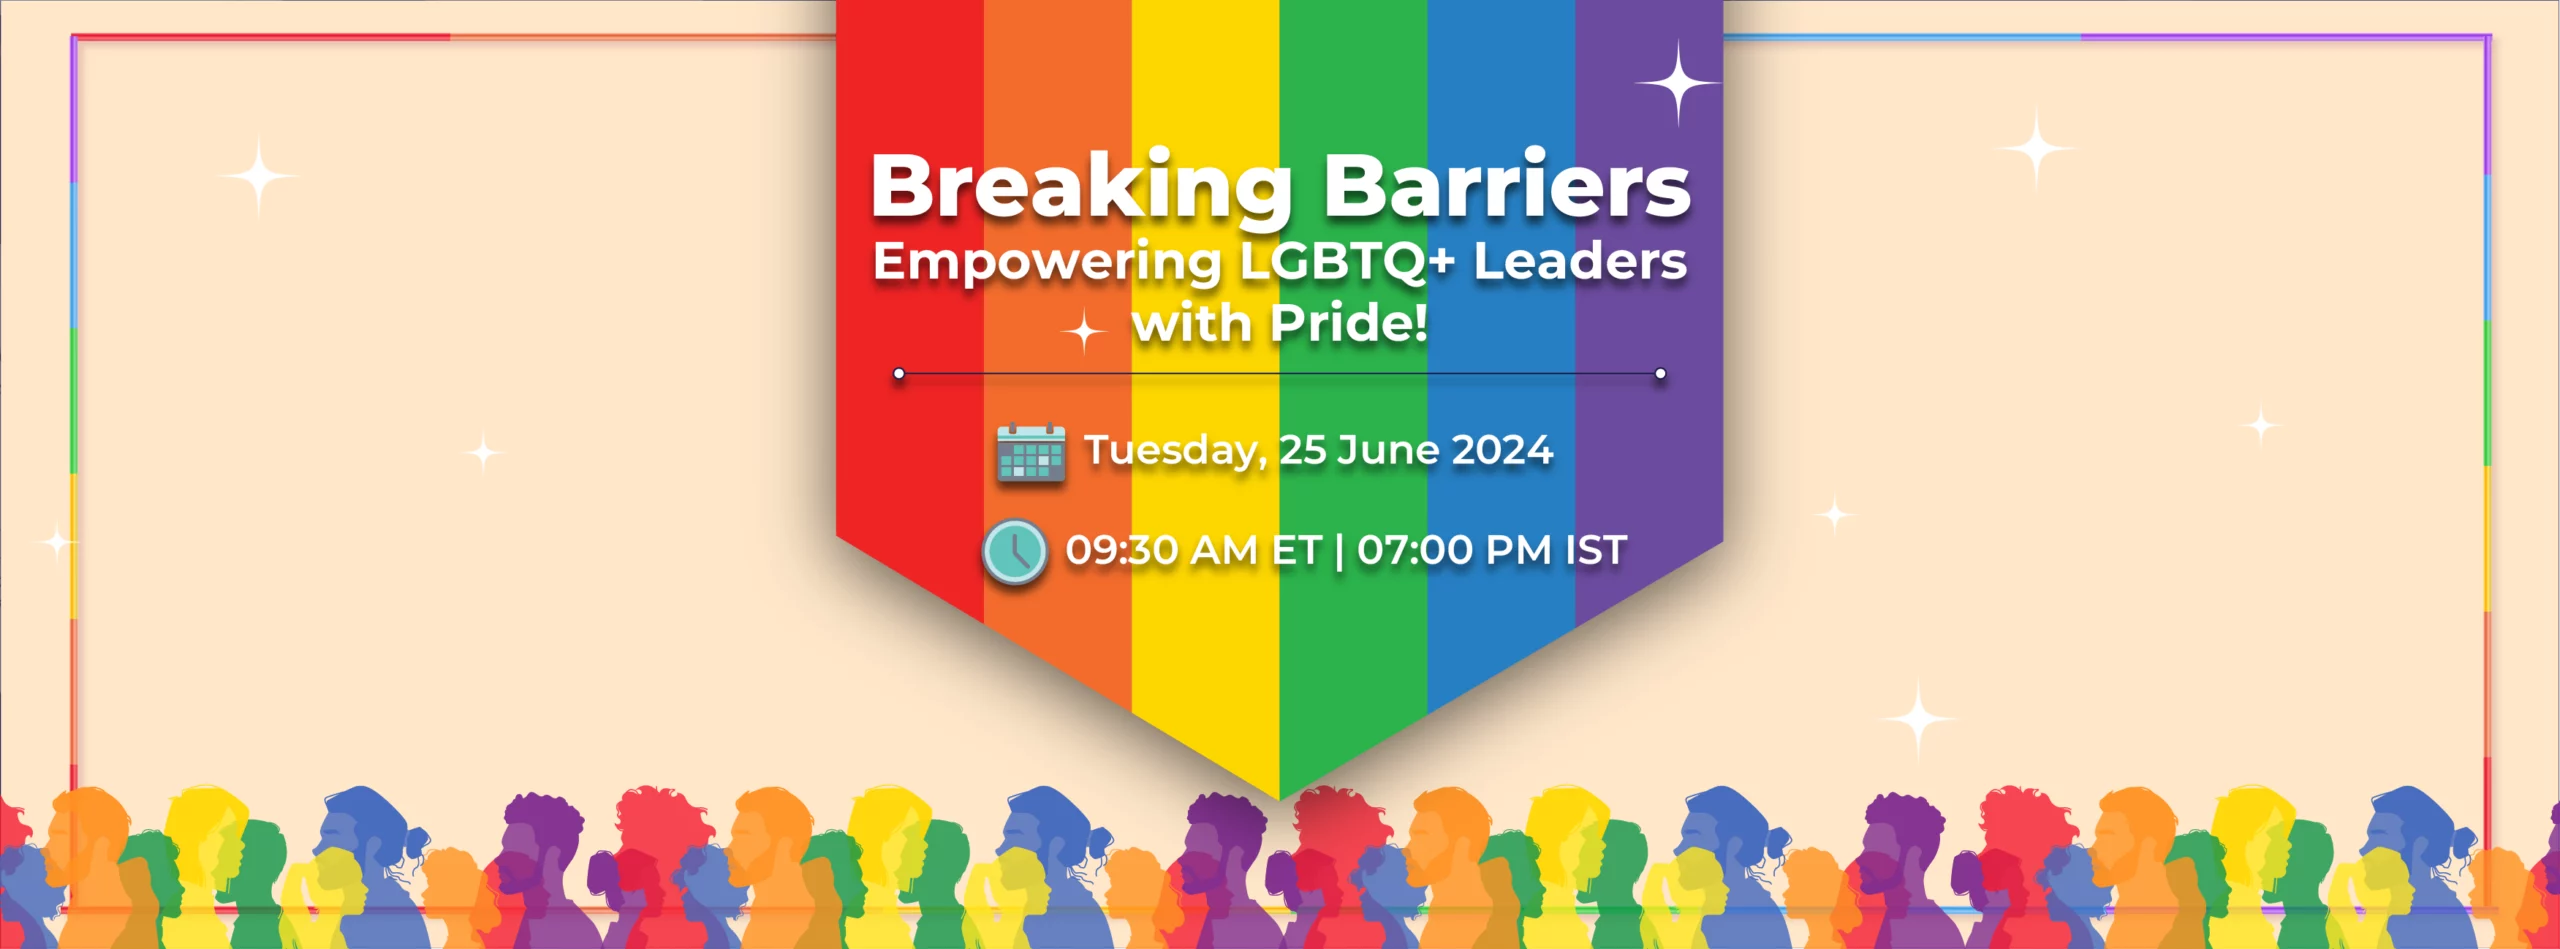 Breaking Barriers: Empowering LGBTQ+ Leaders with Pride